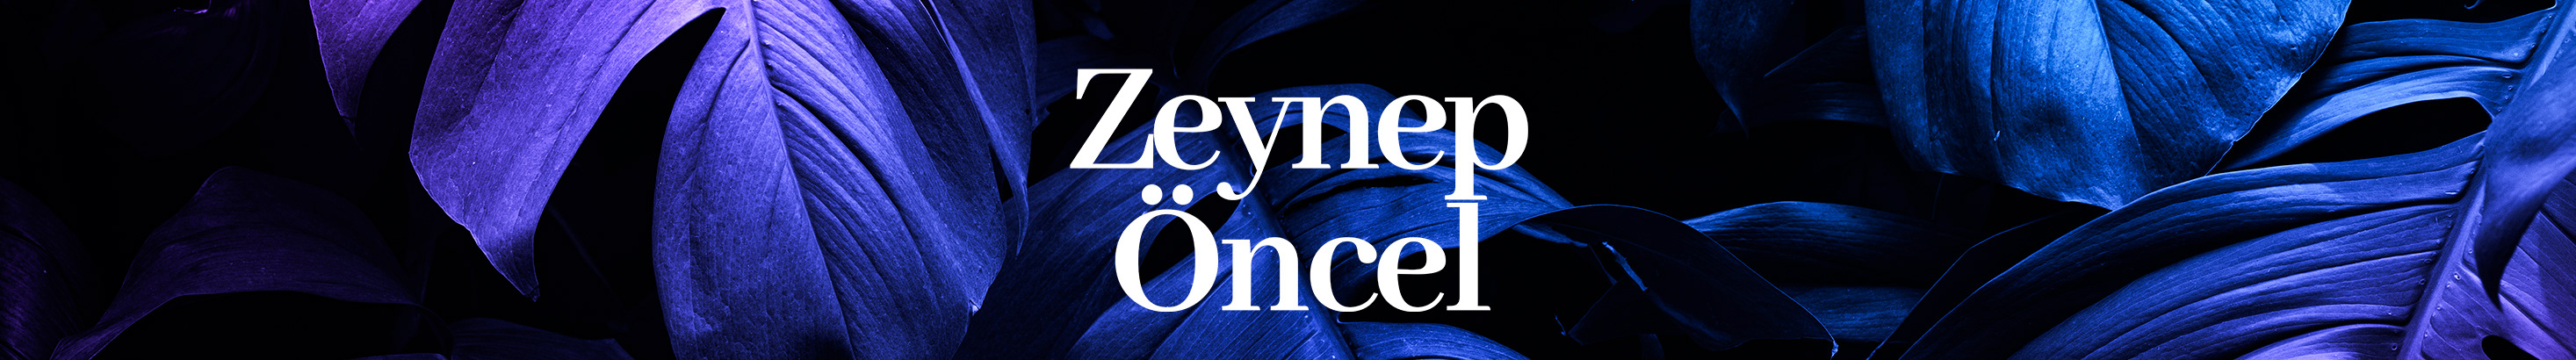 Bannière de profil de Zeynep Öncel